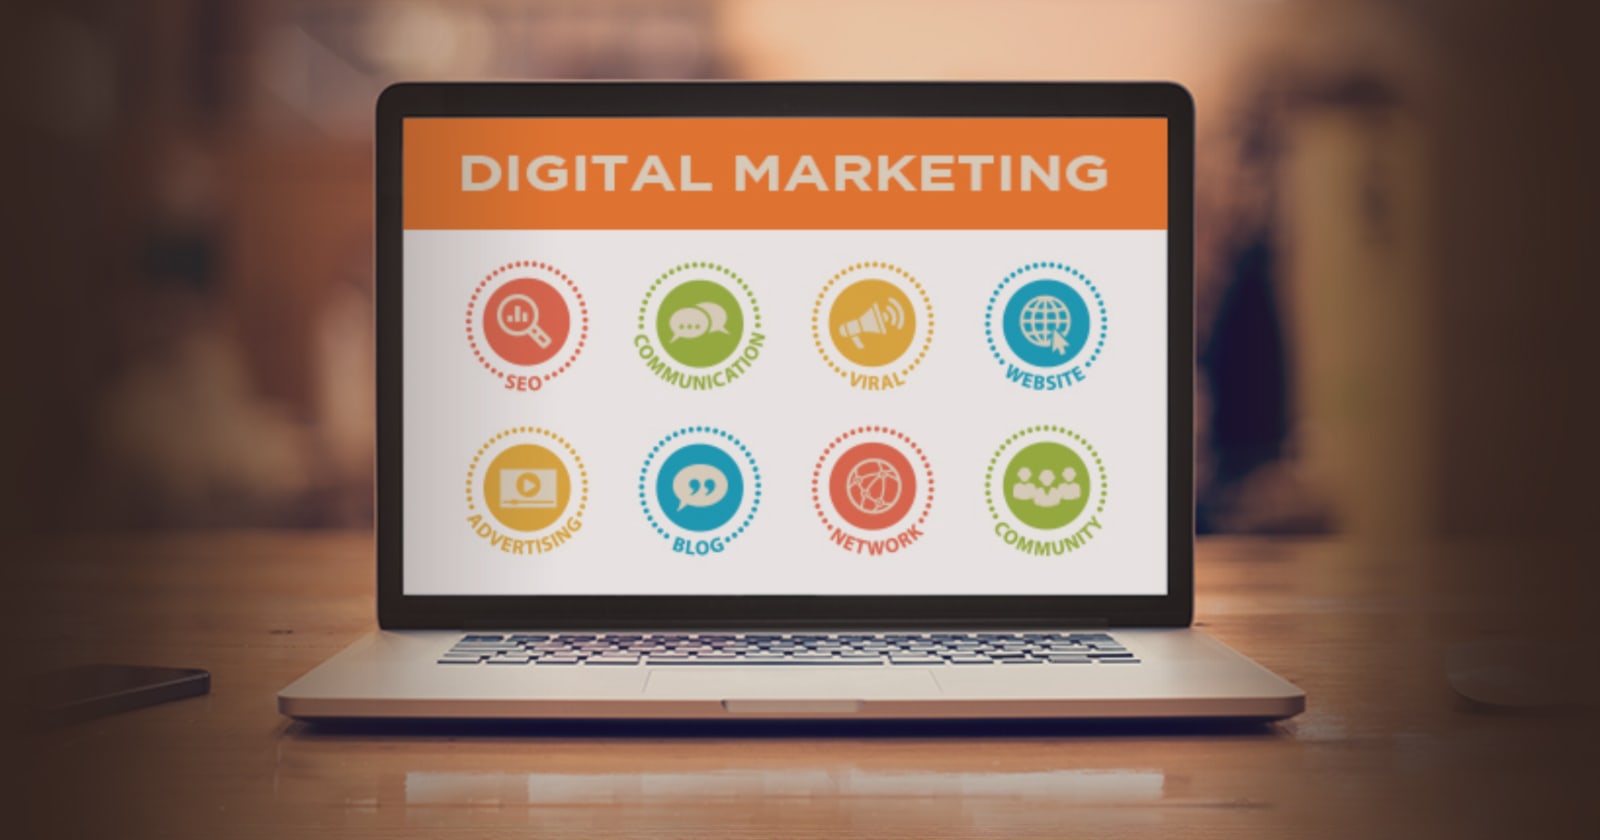 Digital Marketing Course in Australia